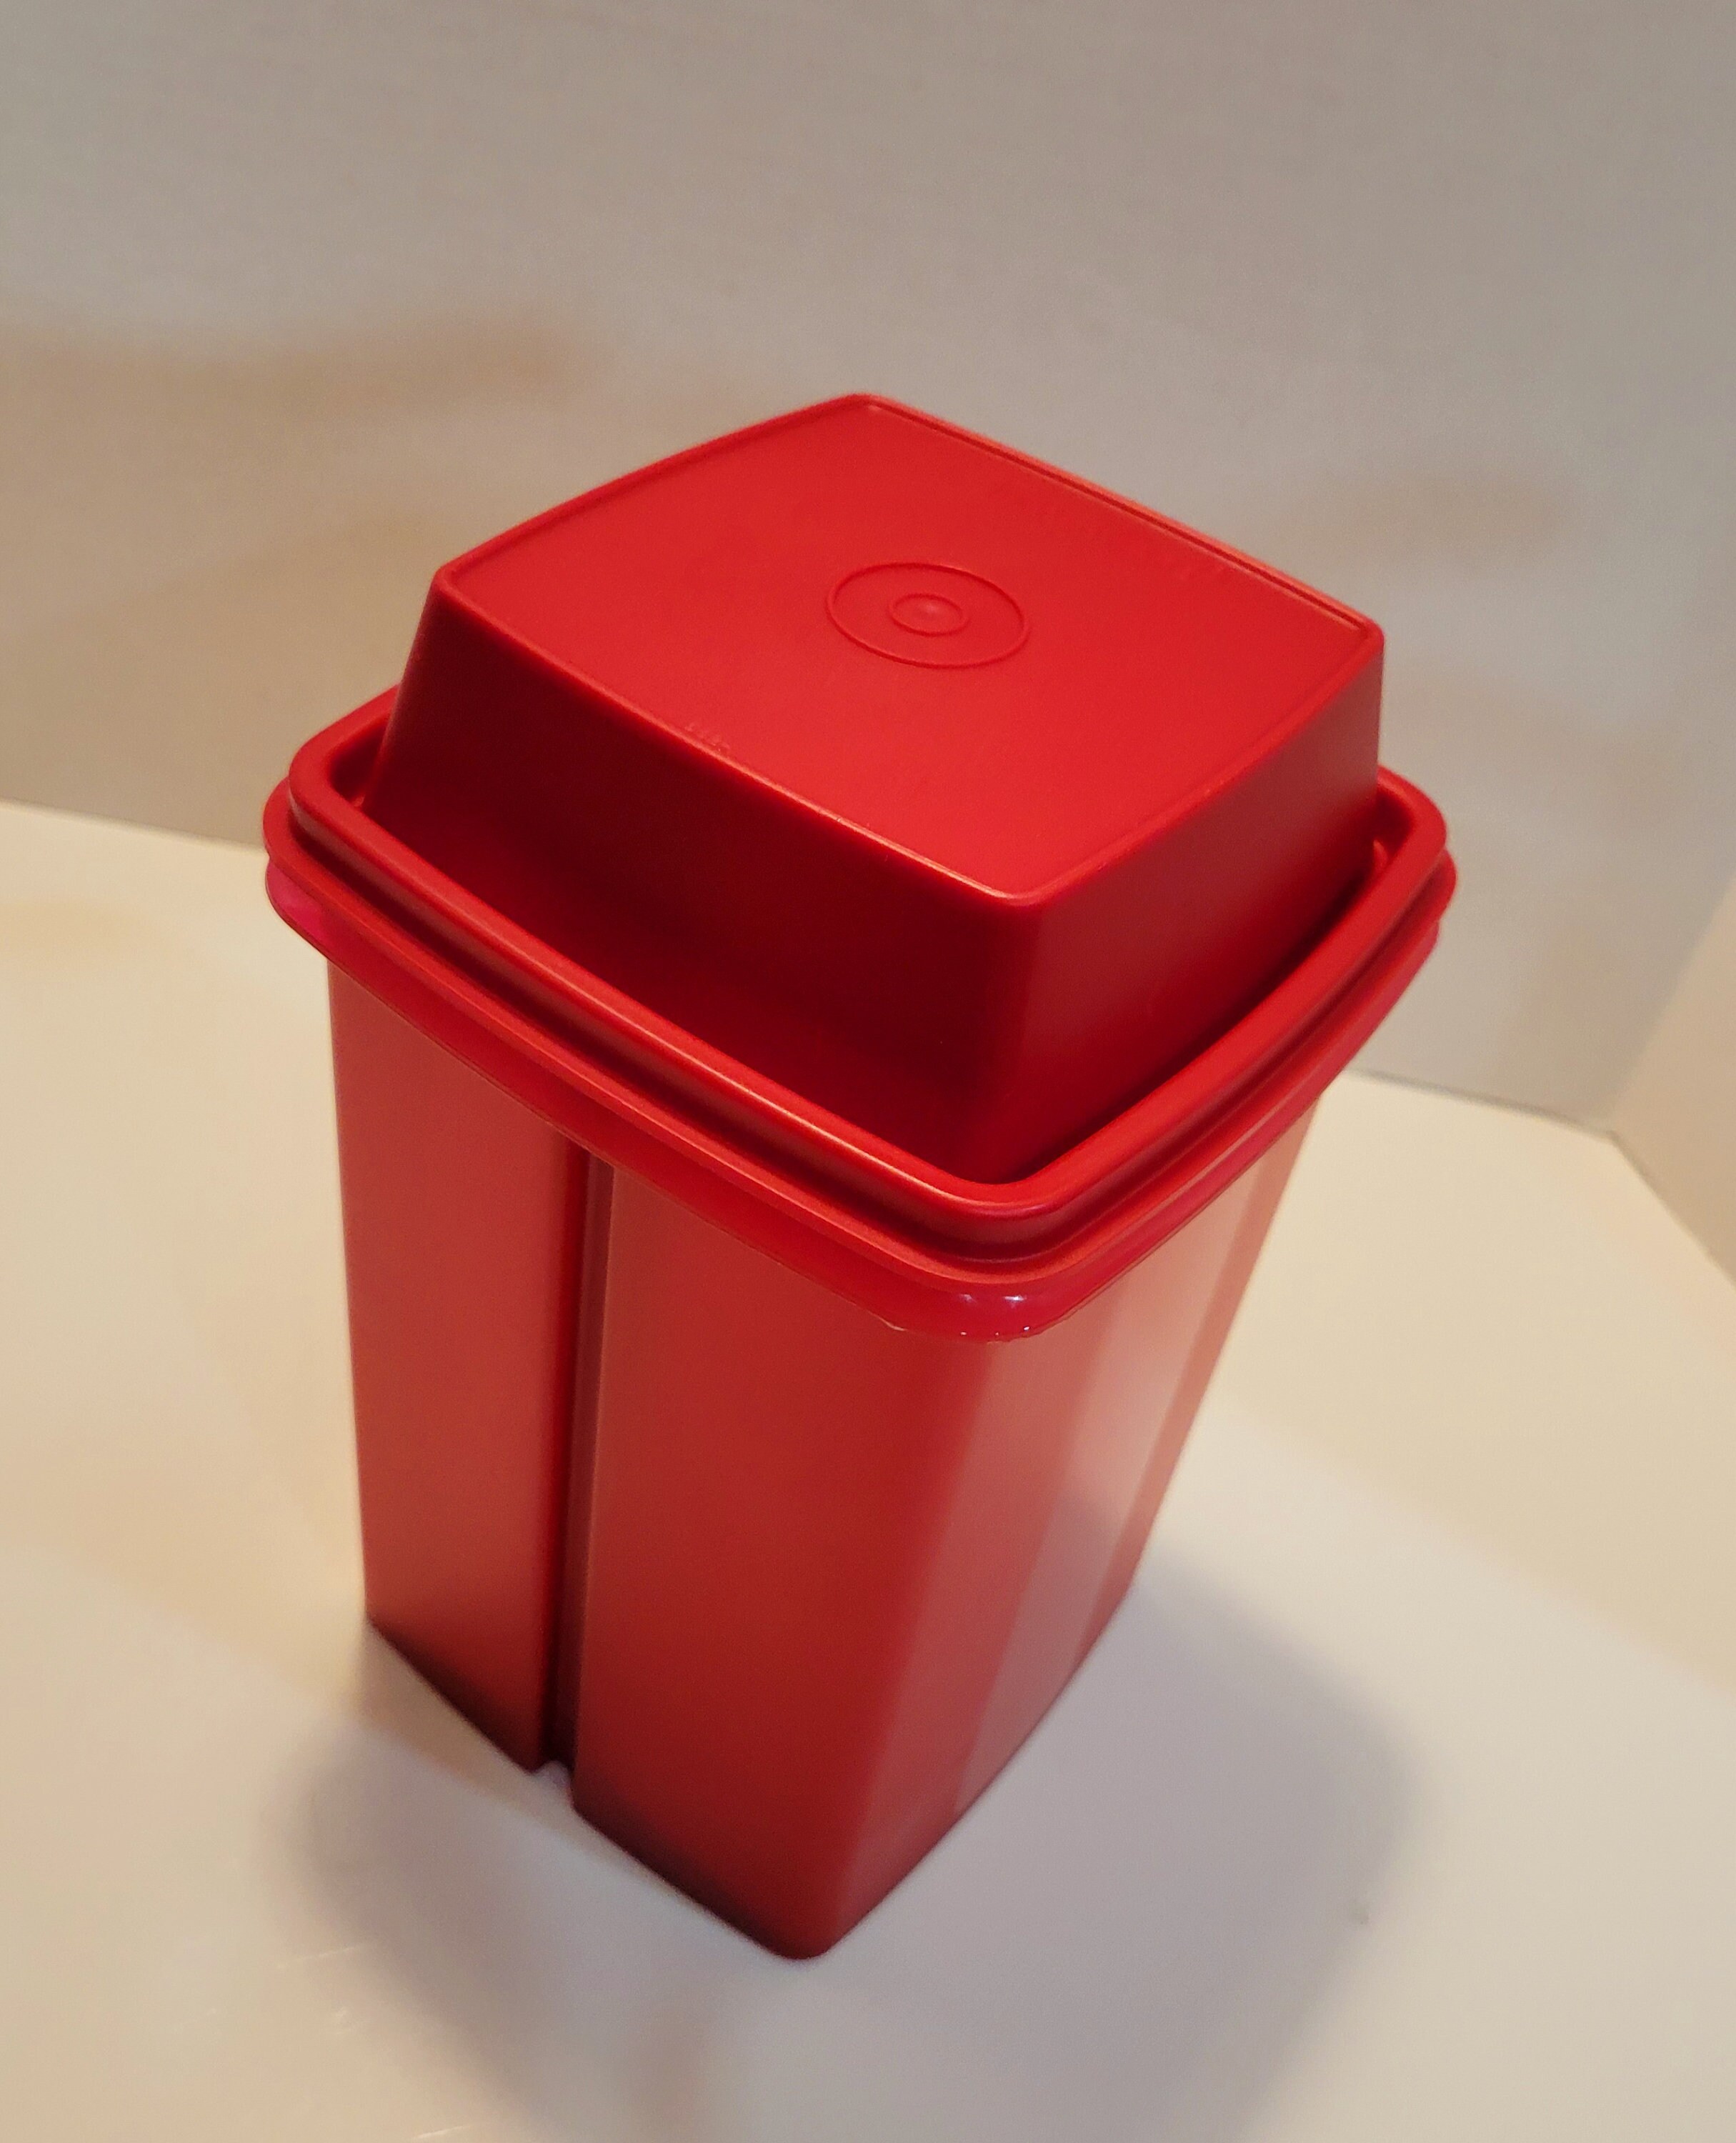 Tupperware Large Square 2 Quart Pick a Deli Container in Red